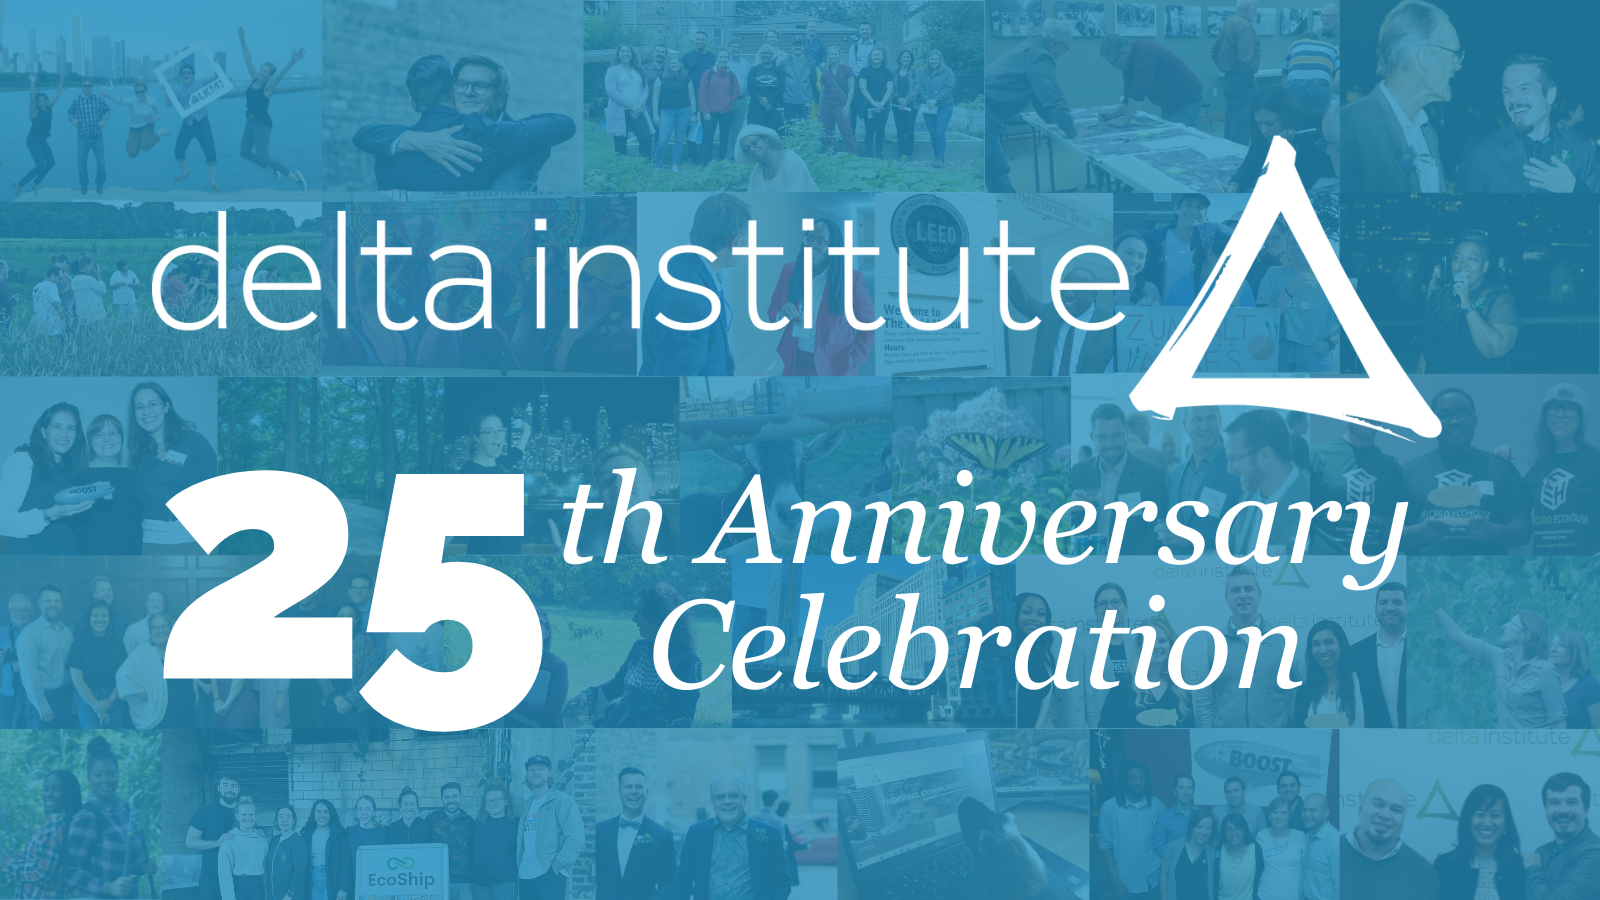 Delta Institute 25th Anniversary Celebration banner